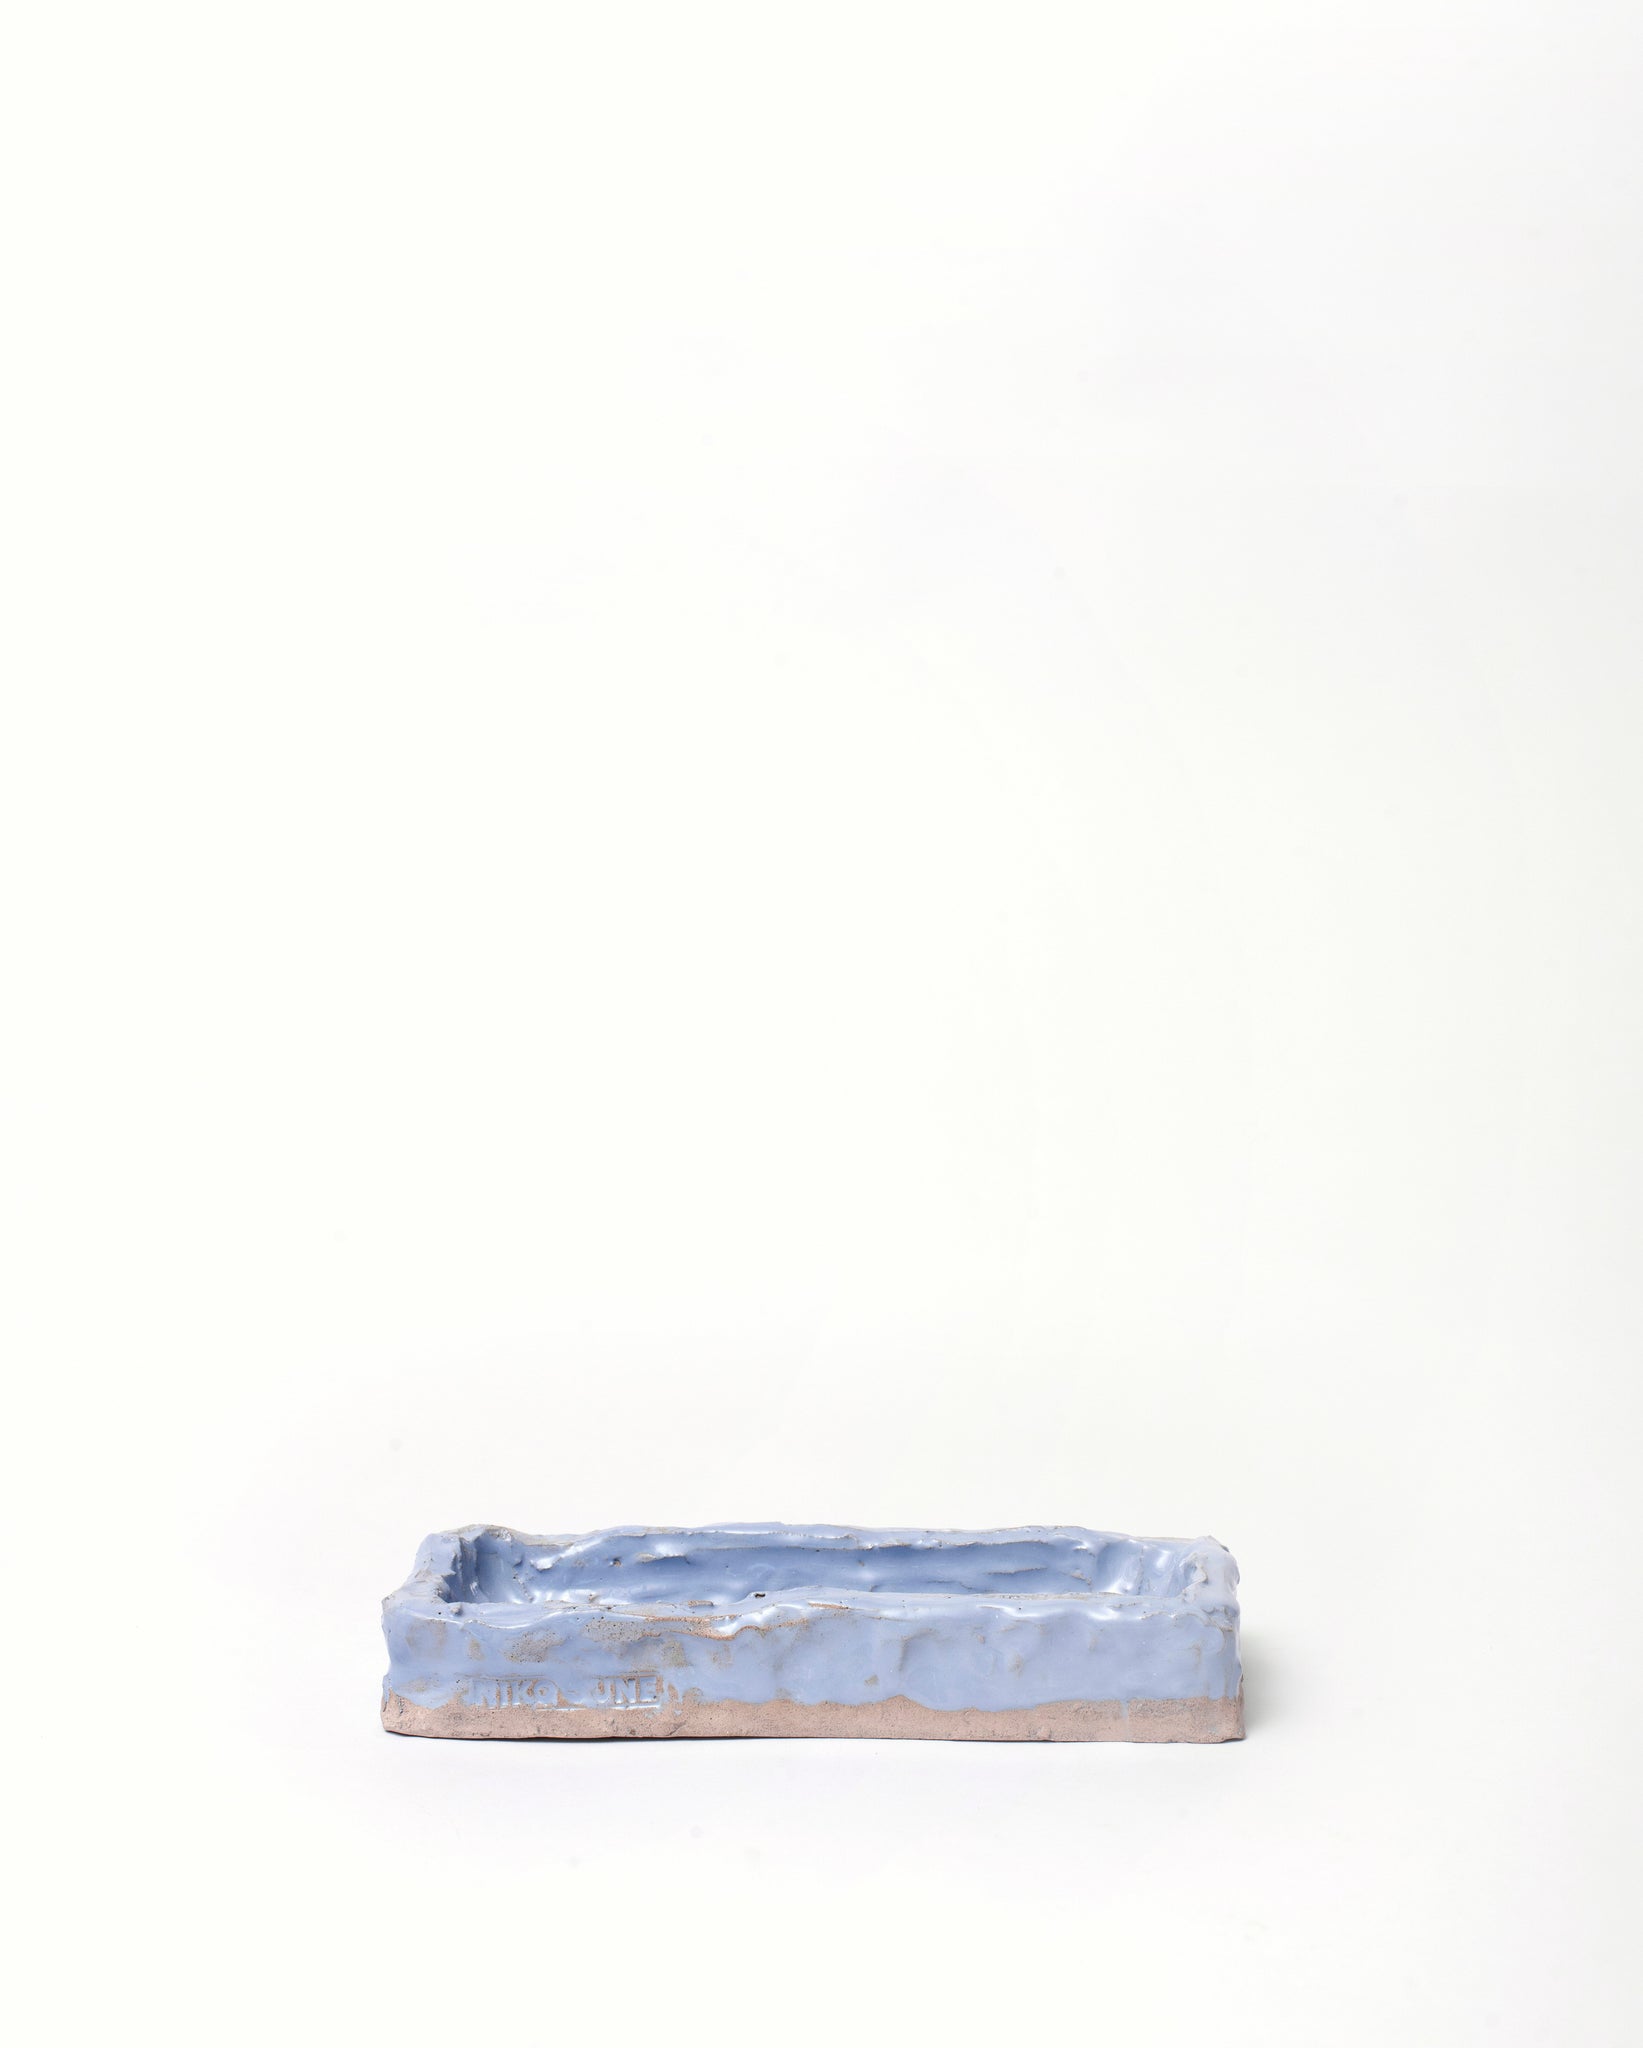 Handmade ceramic organizer object blue in horizontal position white background